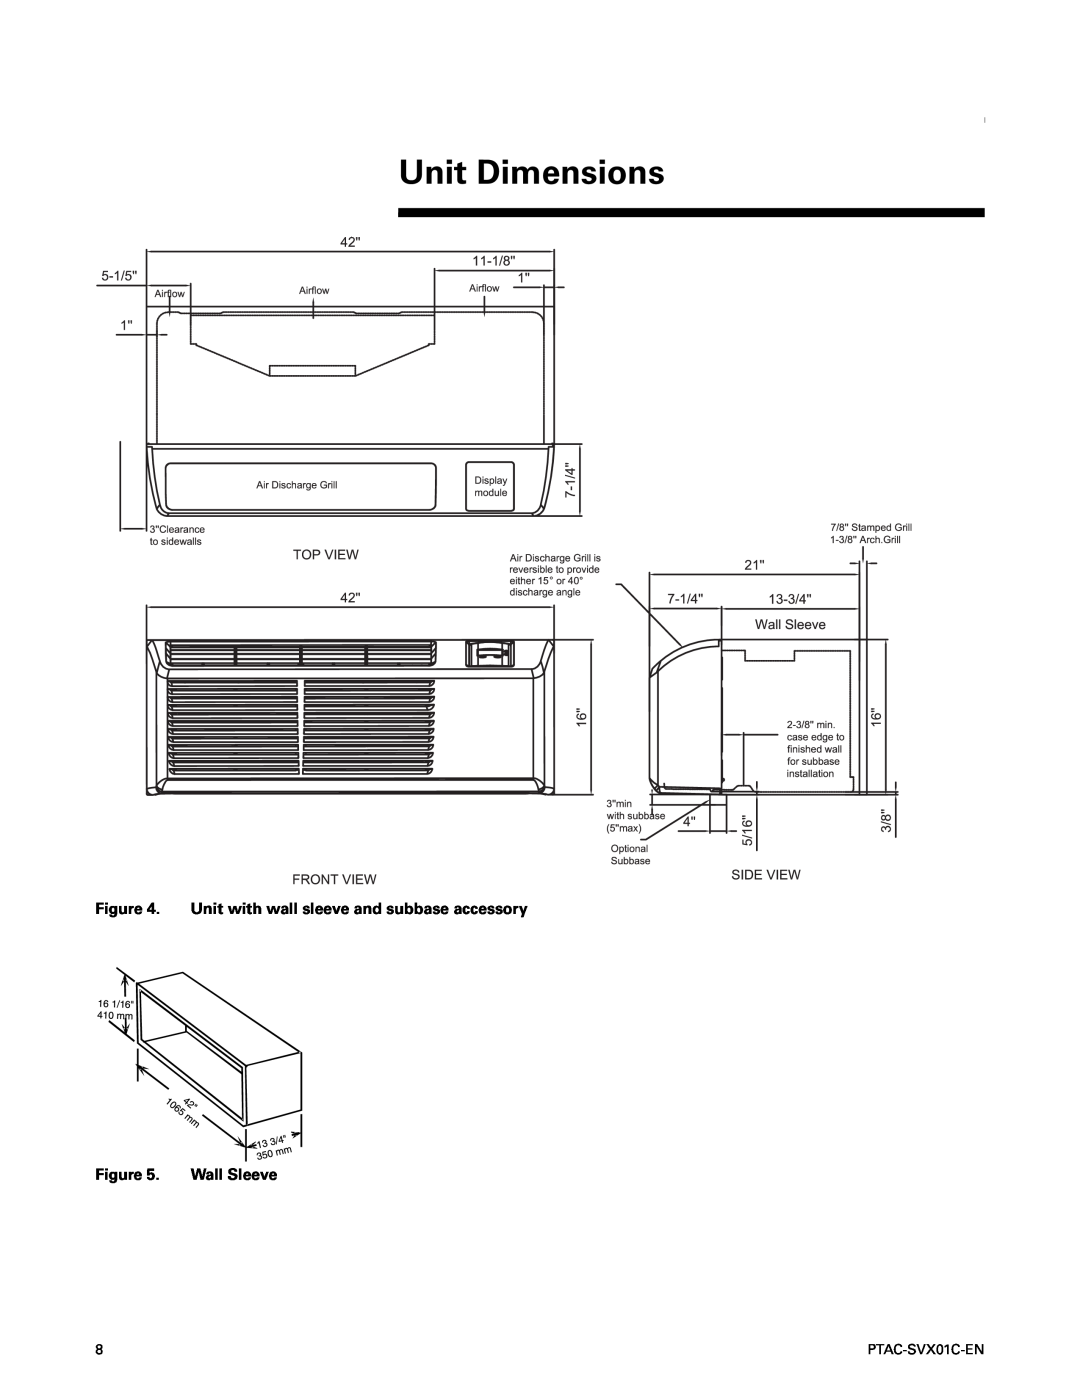 Trane PTAC-SVX01C-EN manual Unit Dimensions, Figure, Wall Sleeve 